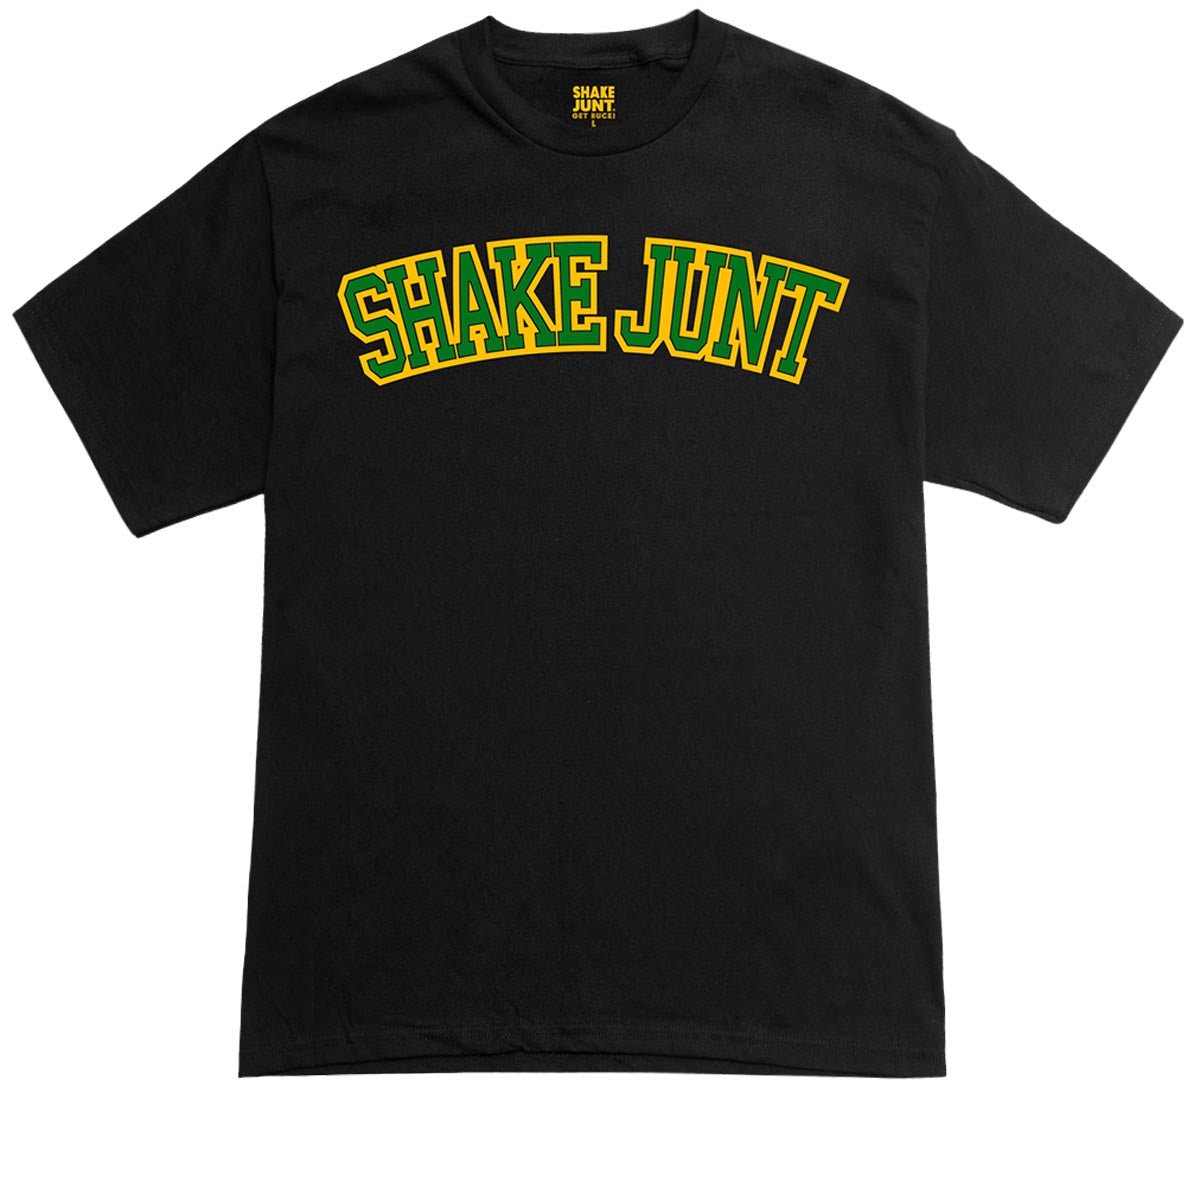 Shake Junt Arch T-Shirt - Black image 1